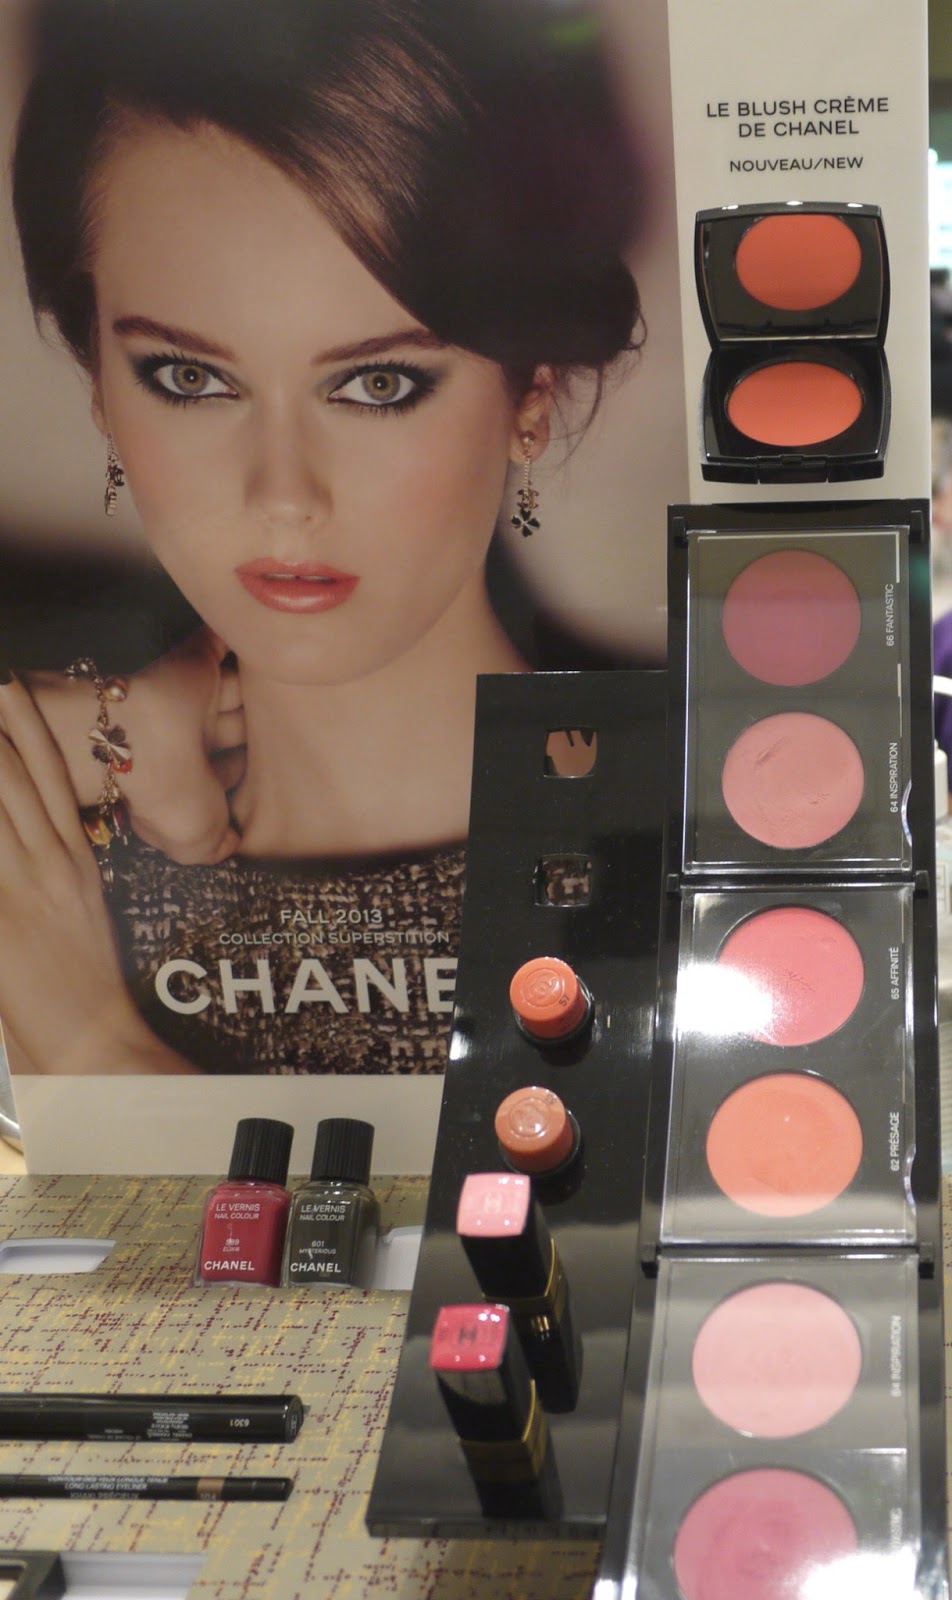 Best Things in Beauty: Chanel Le Blush Crème de Chanel in